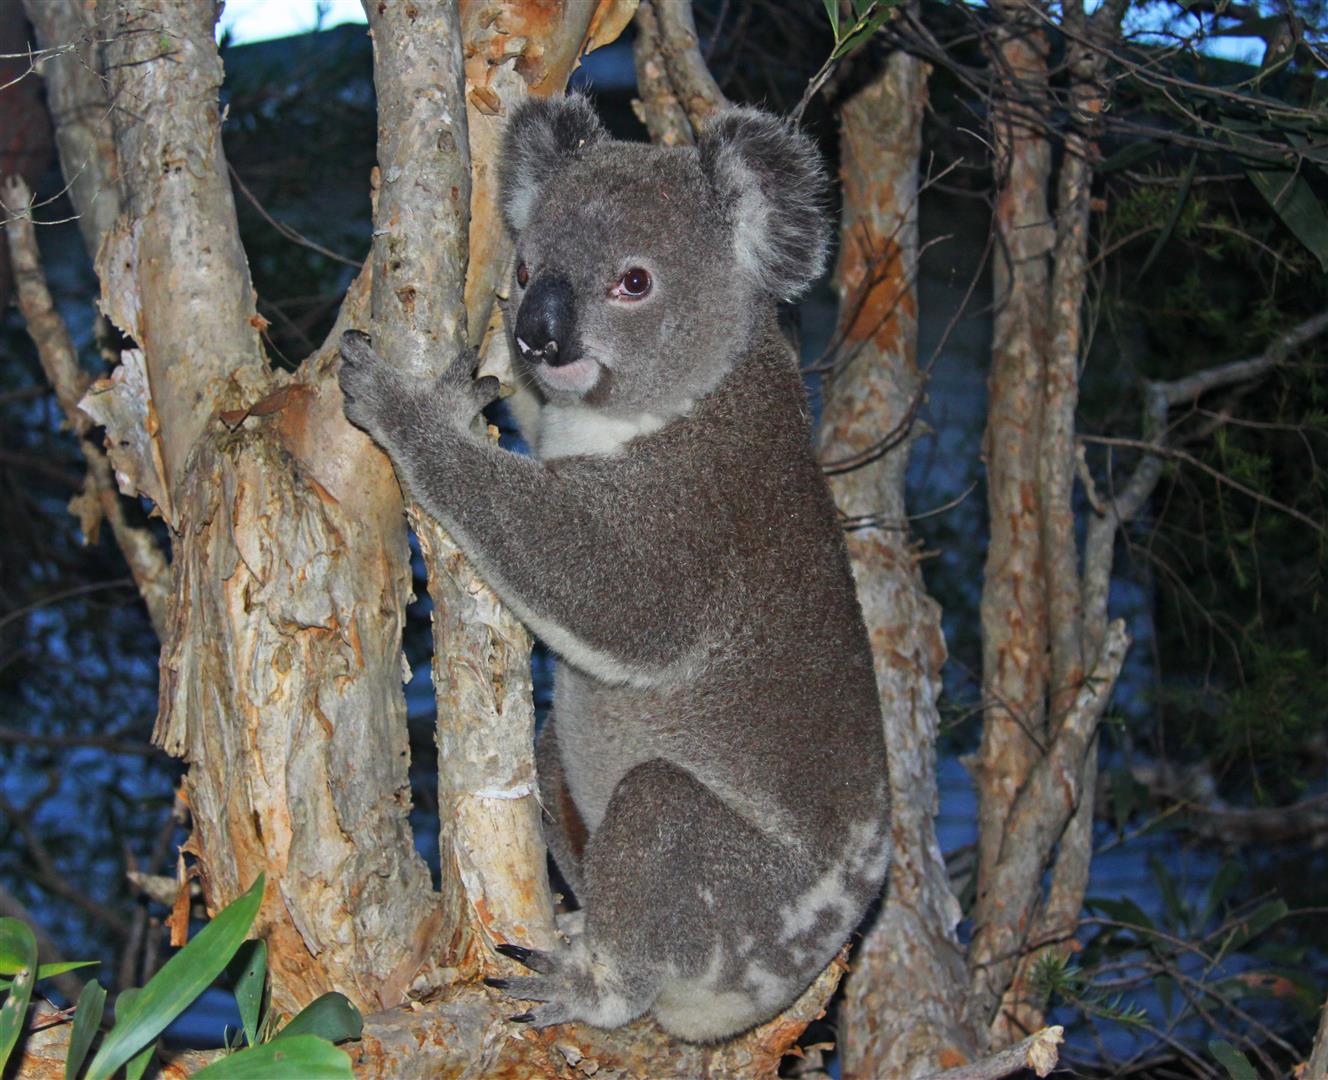 Koala, copyright Des O'Neill